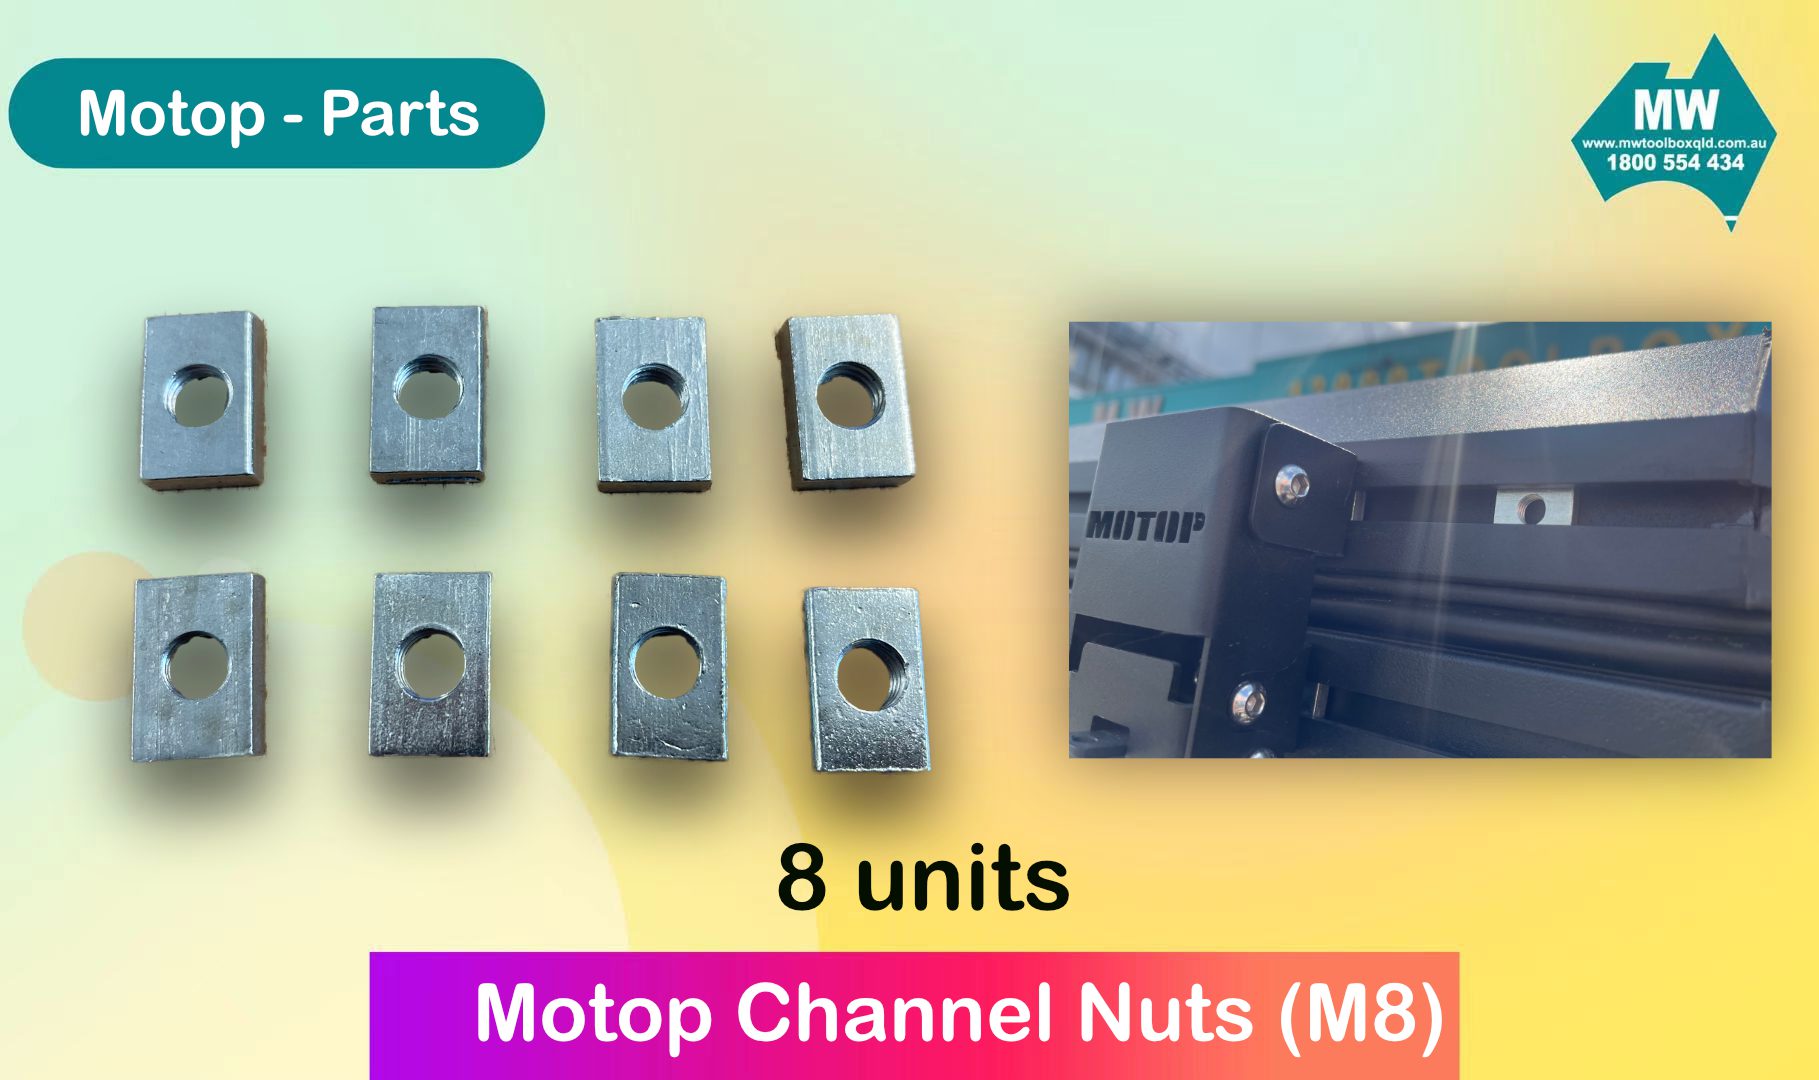 Motop channel nuts